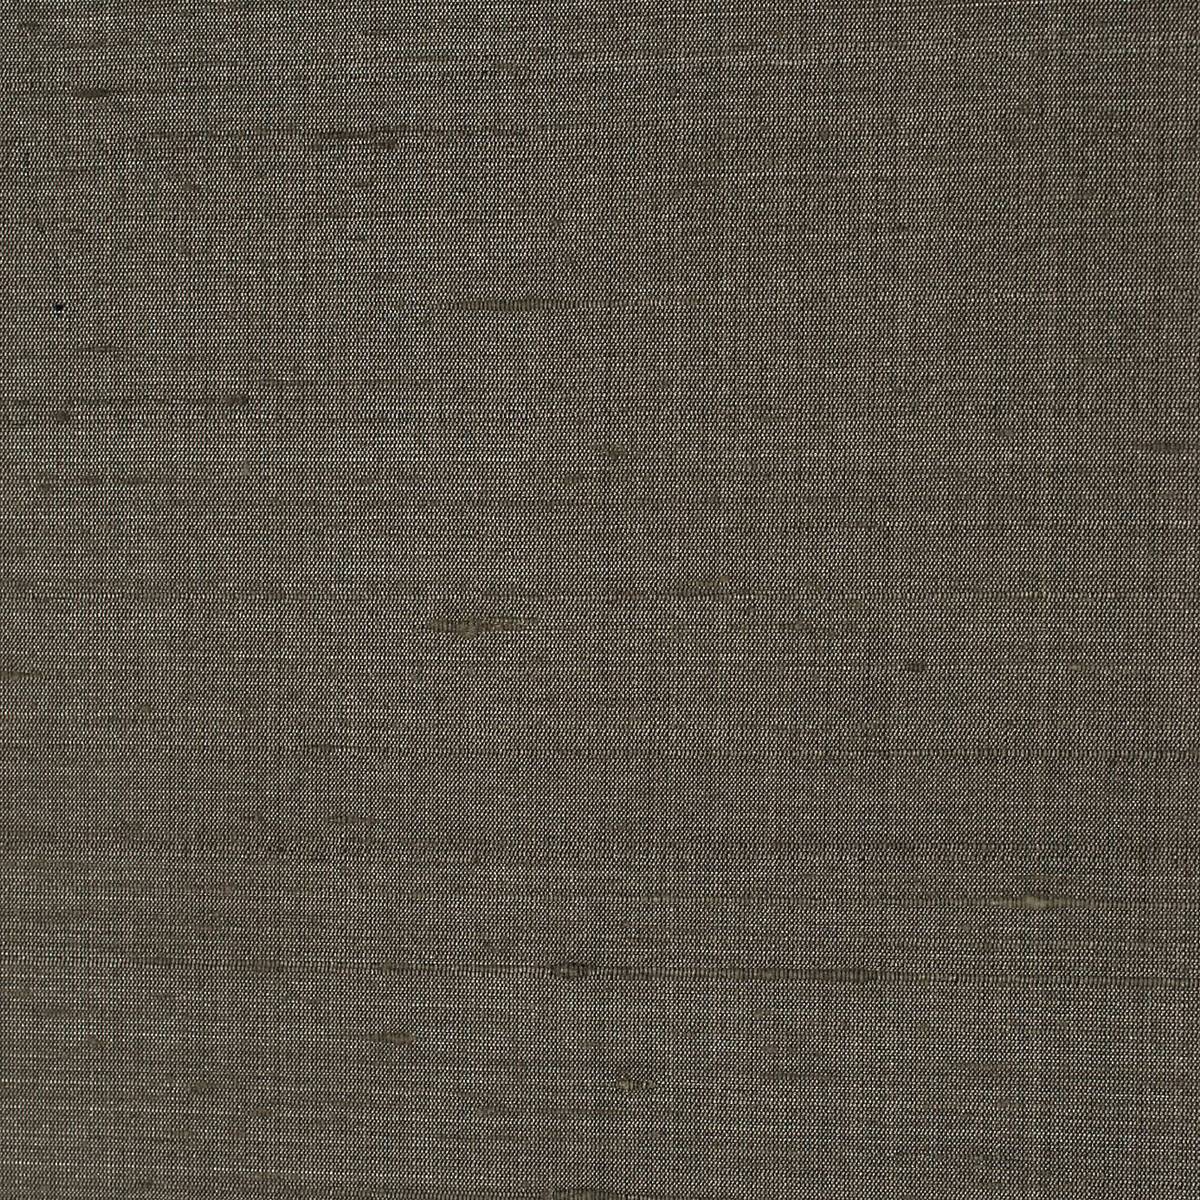 Lilaea Silks Walnut Fabric by Harlequin